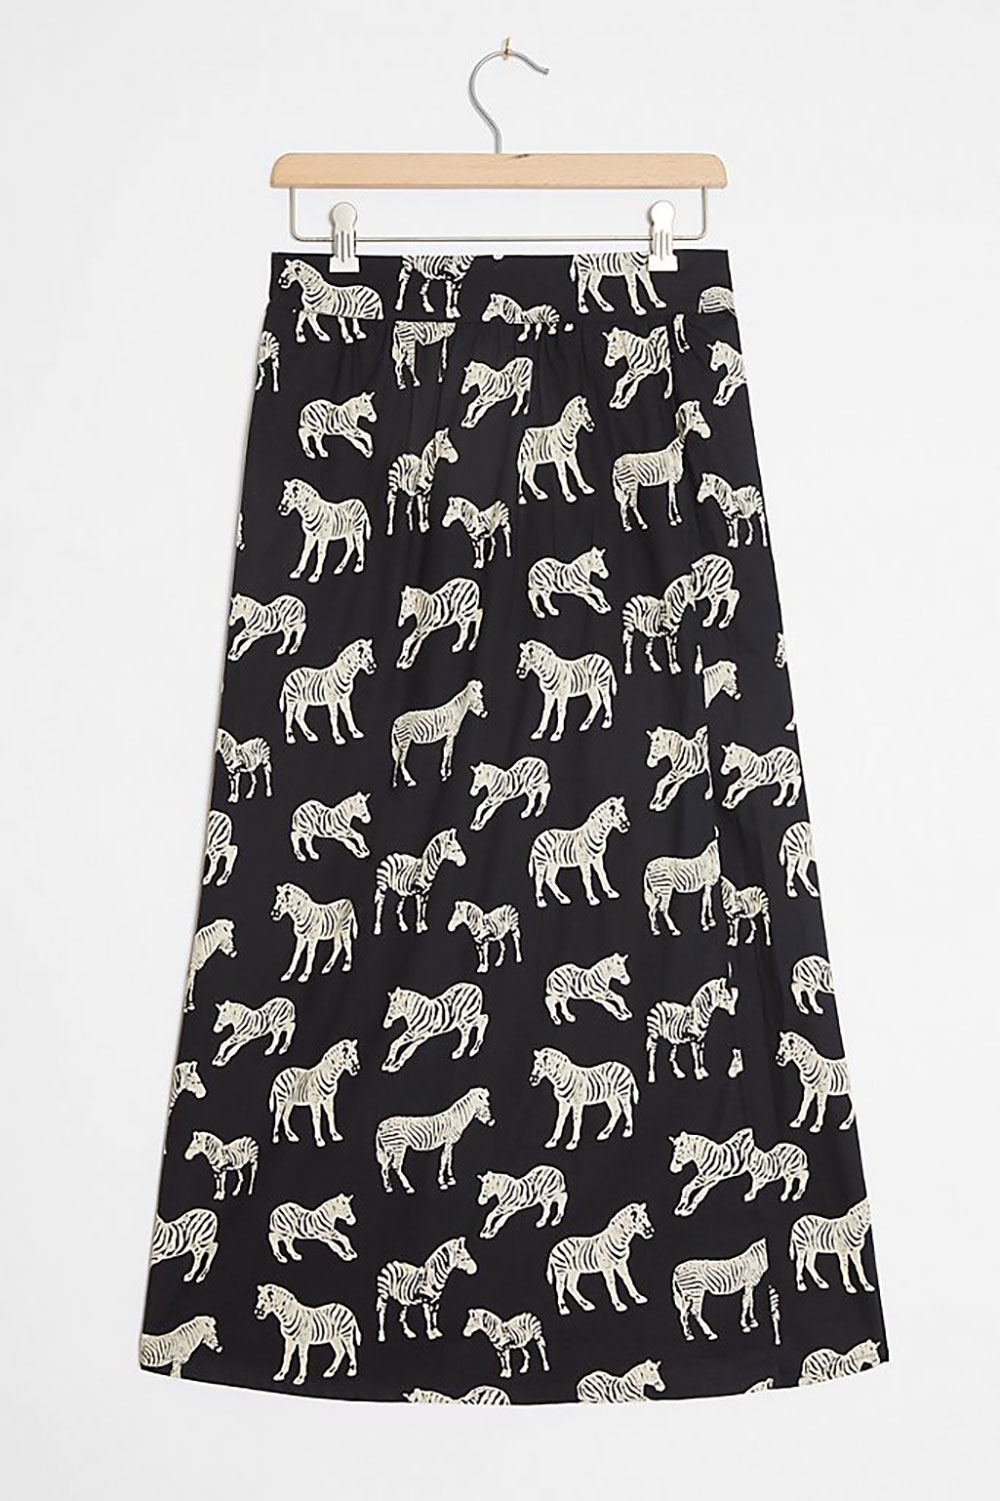 Black and white zebra skirt